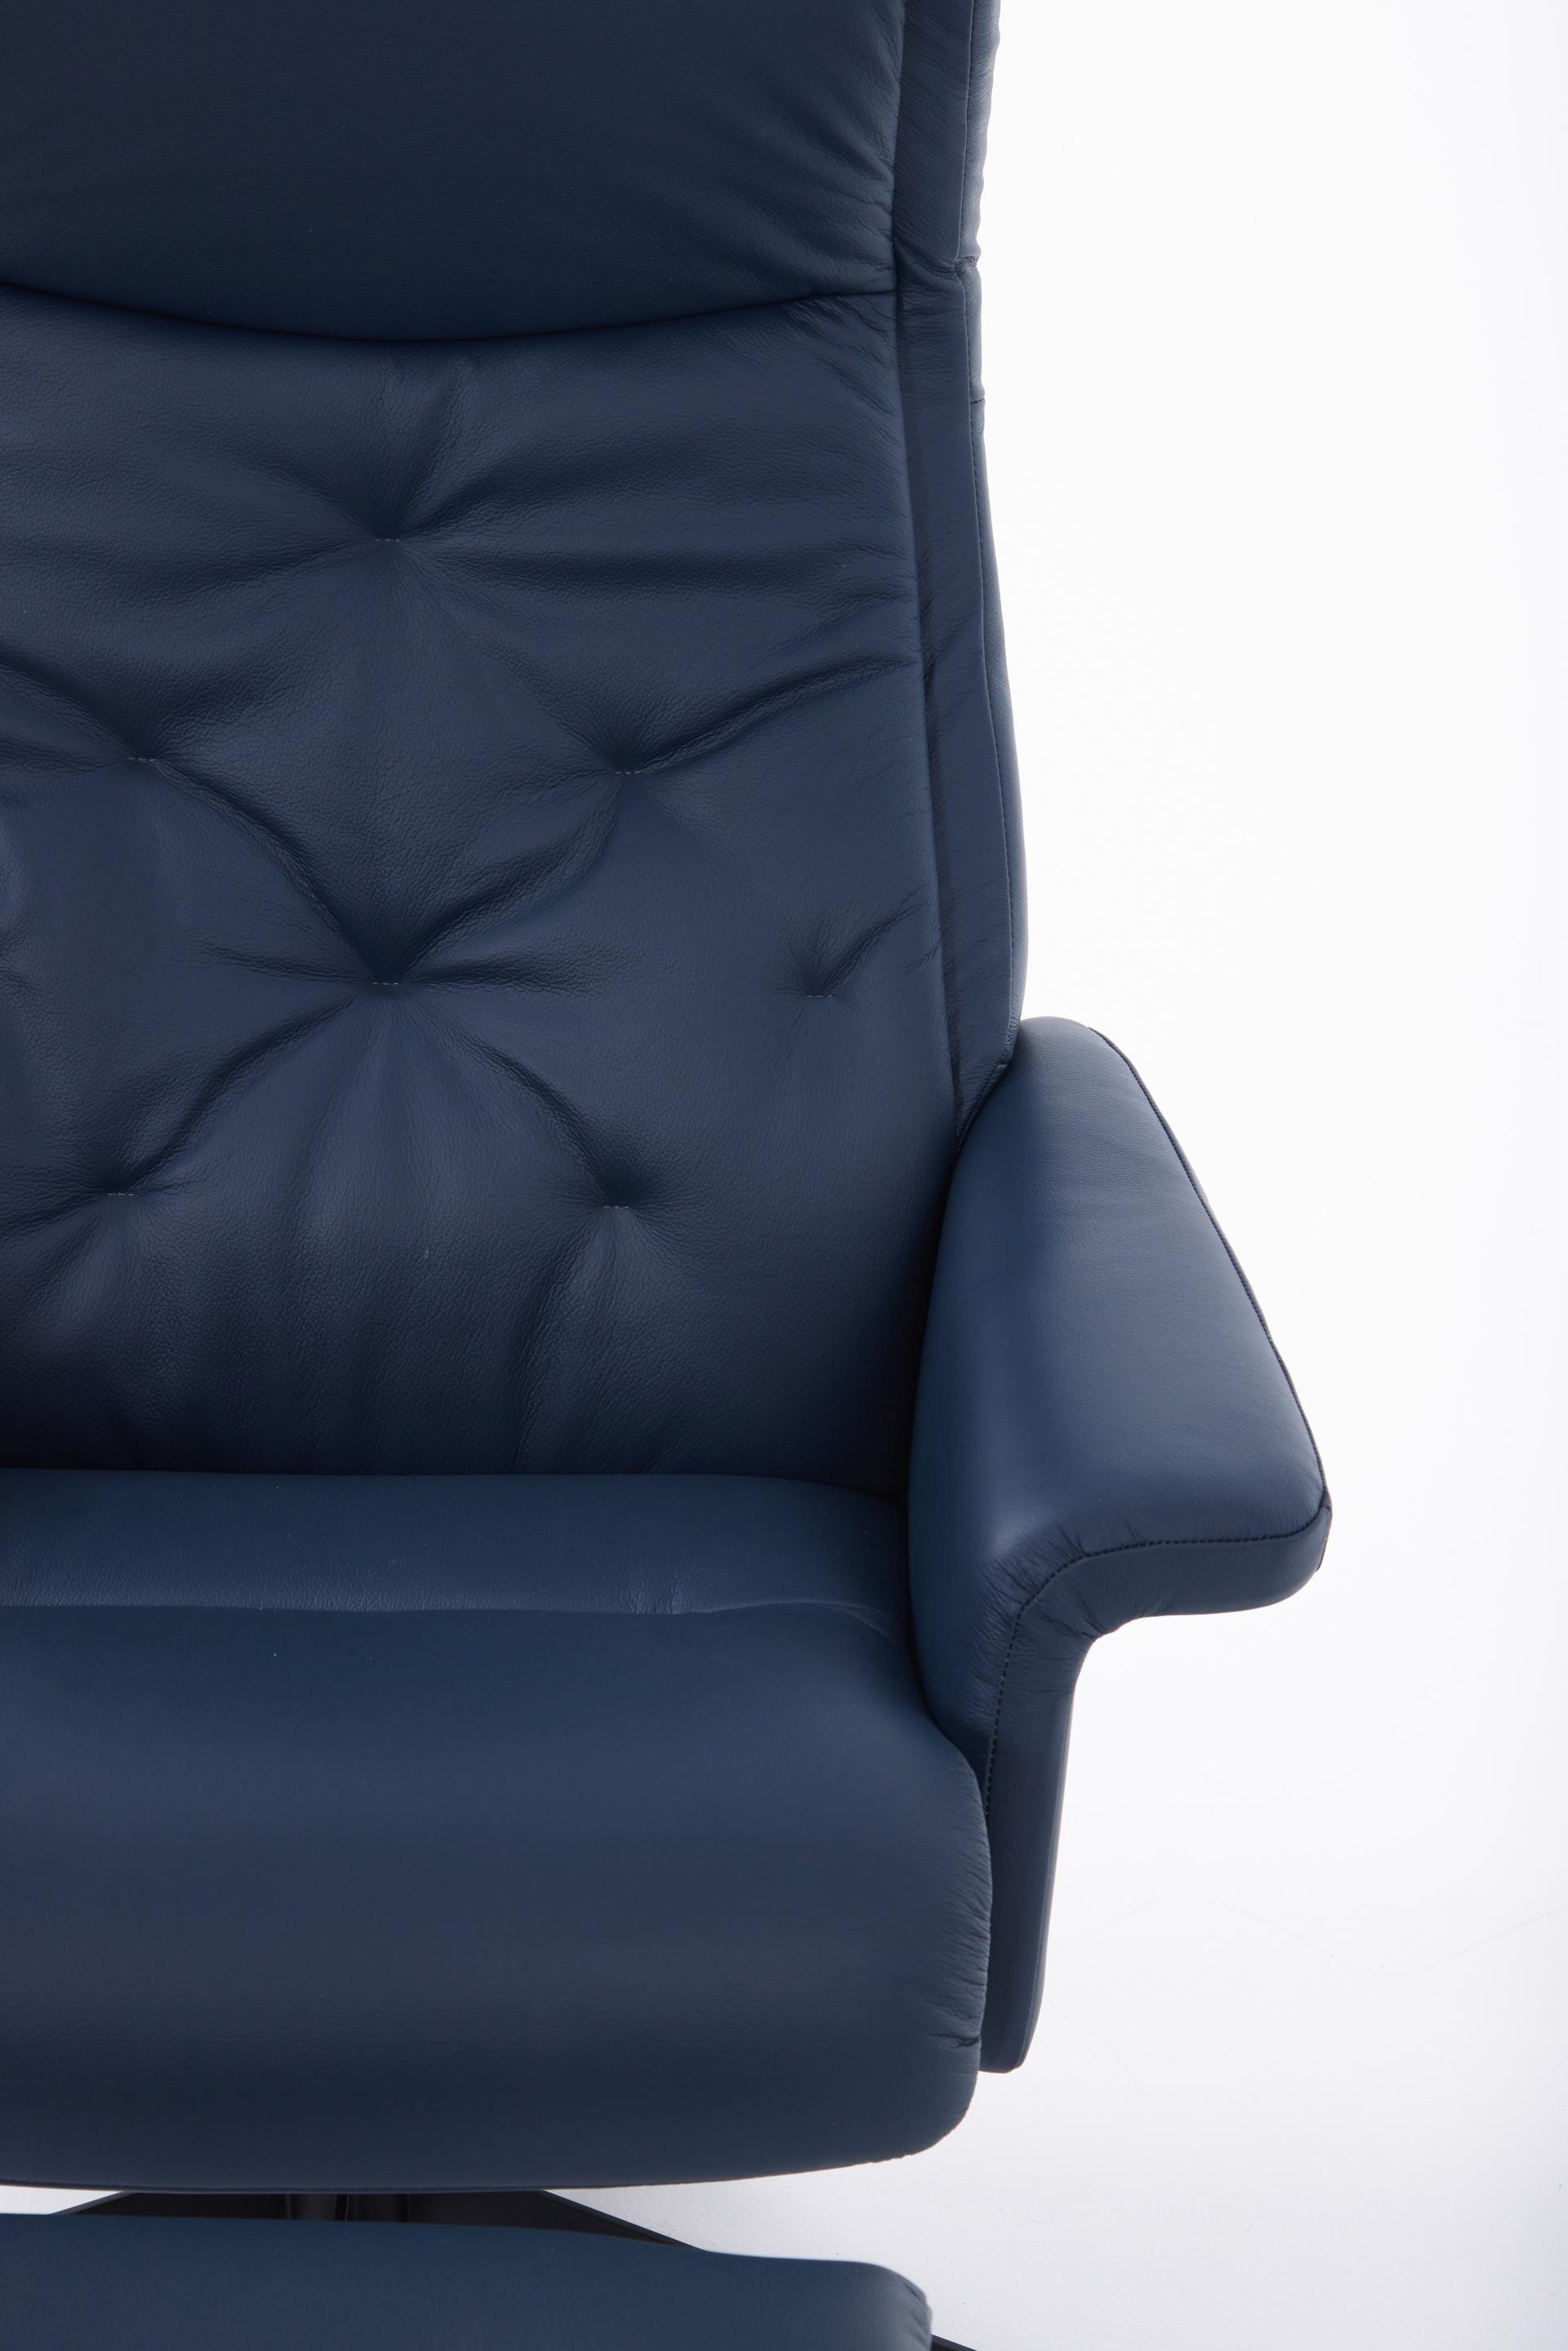 Ekornes Scandi 1120 Chair Prime Blue